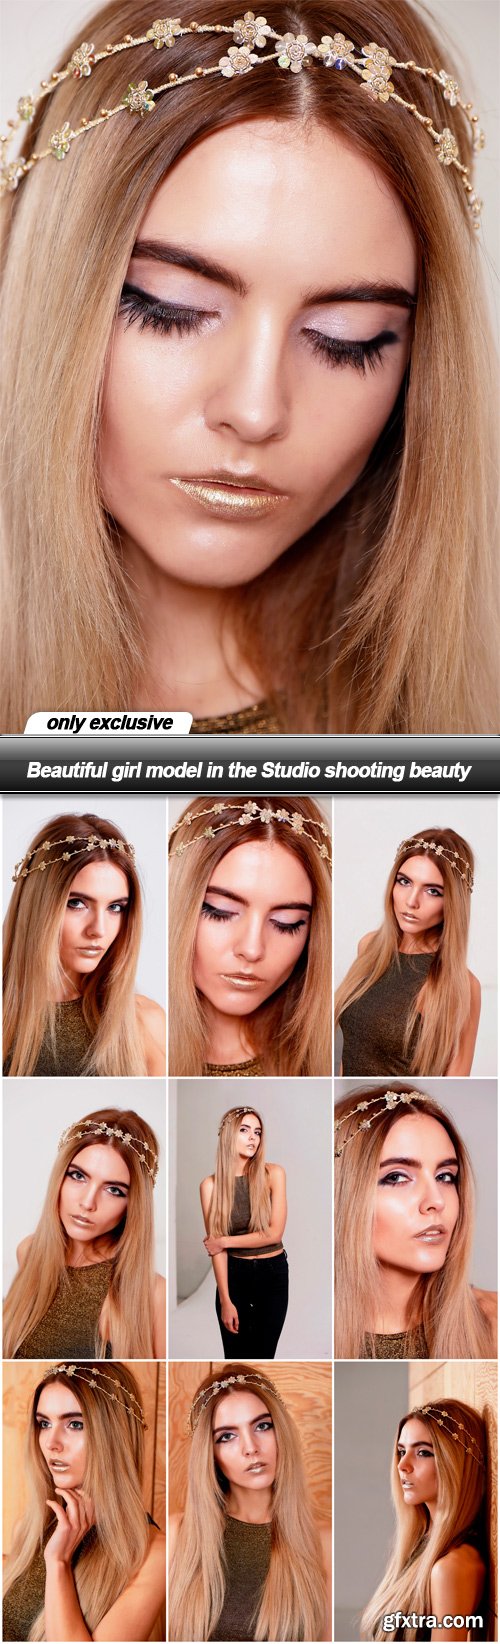 Beautiful girl model in the Studio shooting beauty - 9 UHQ JPEG